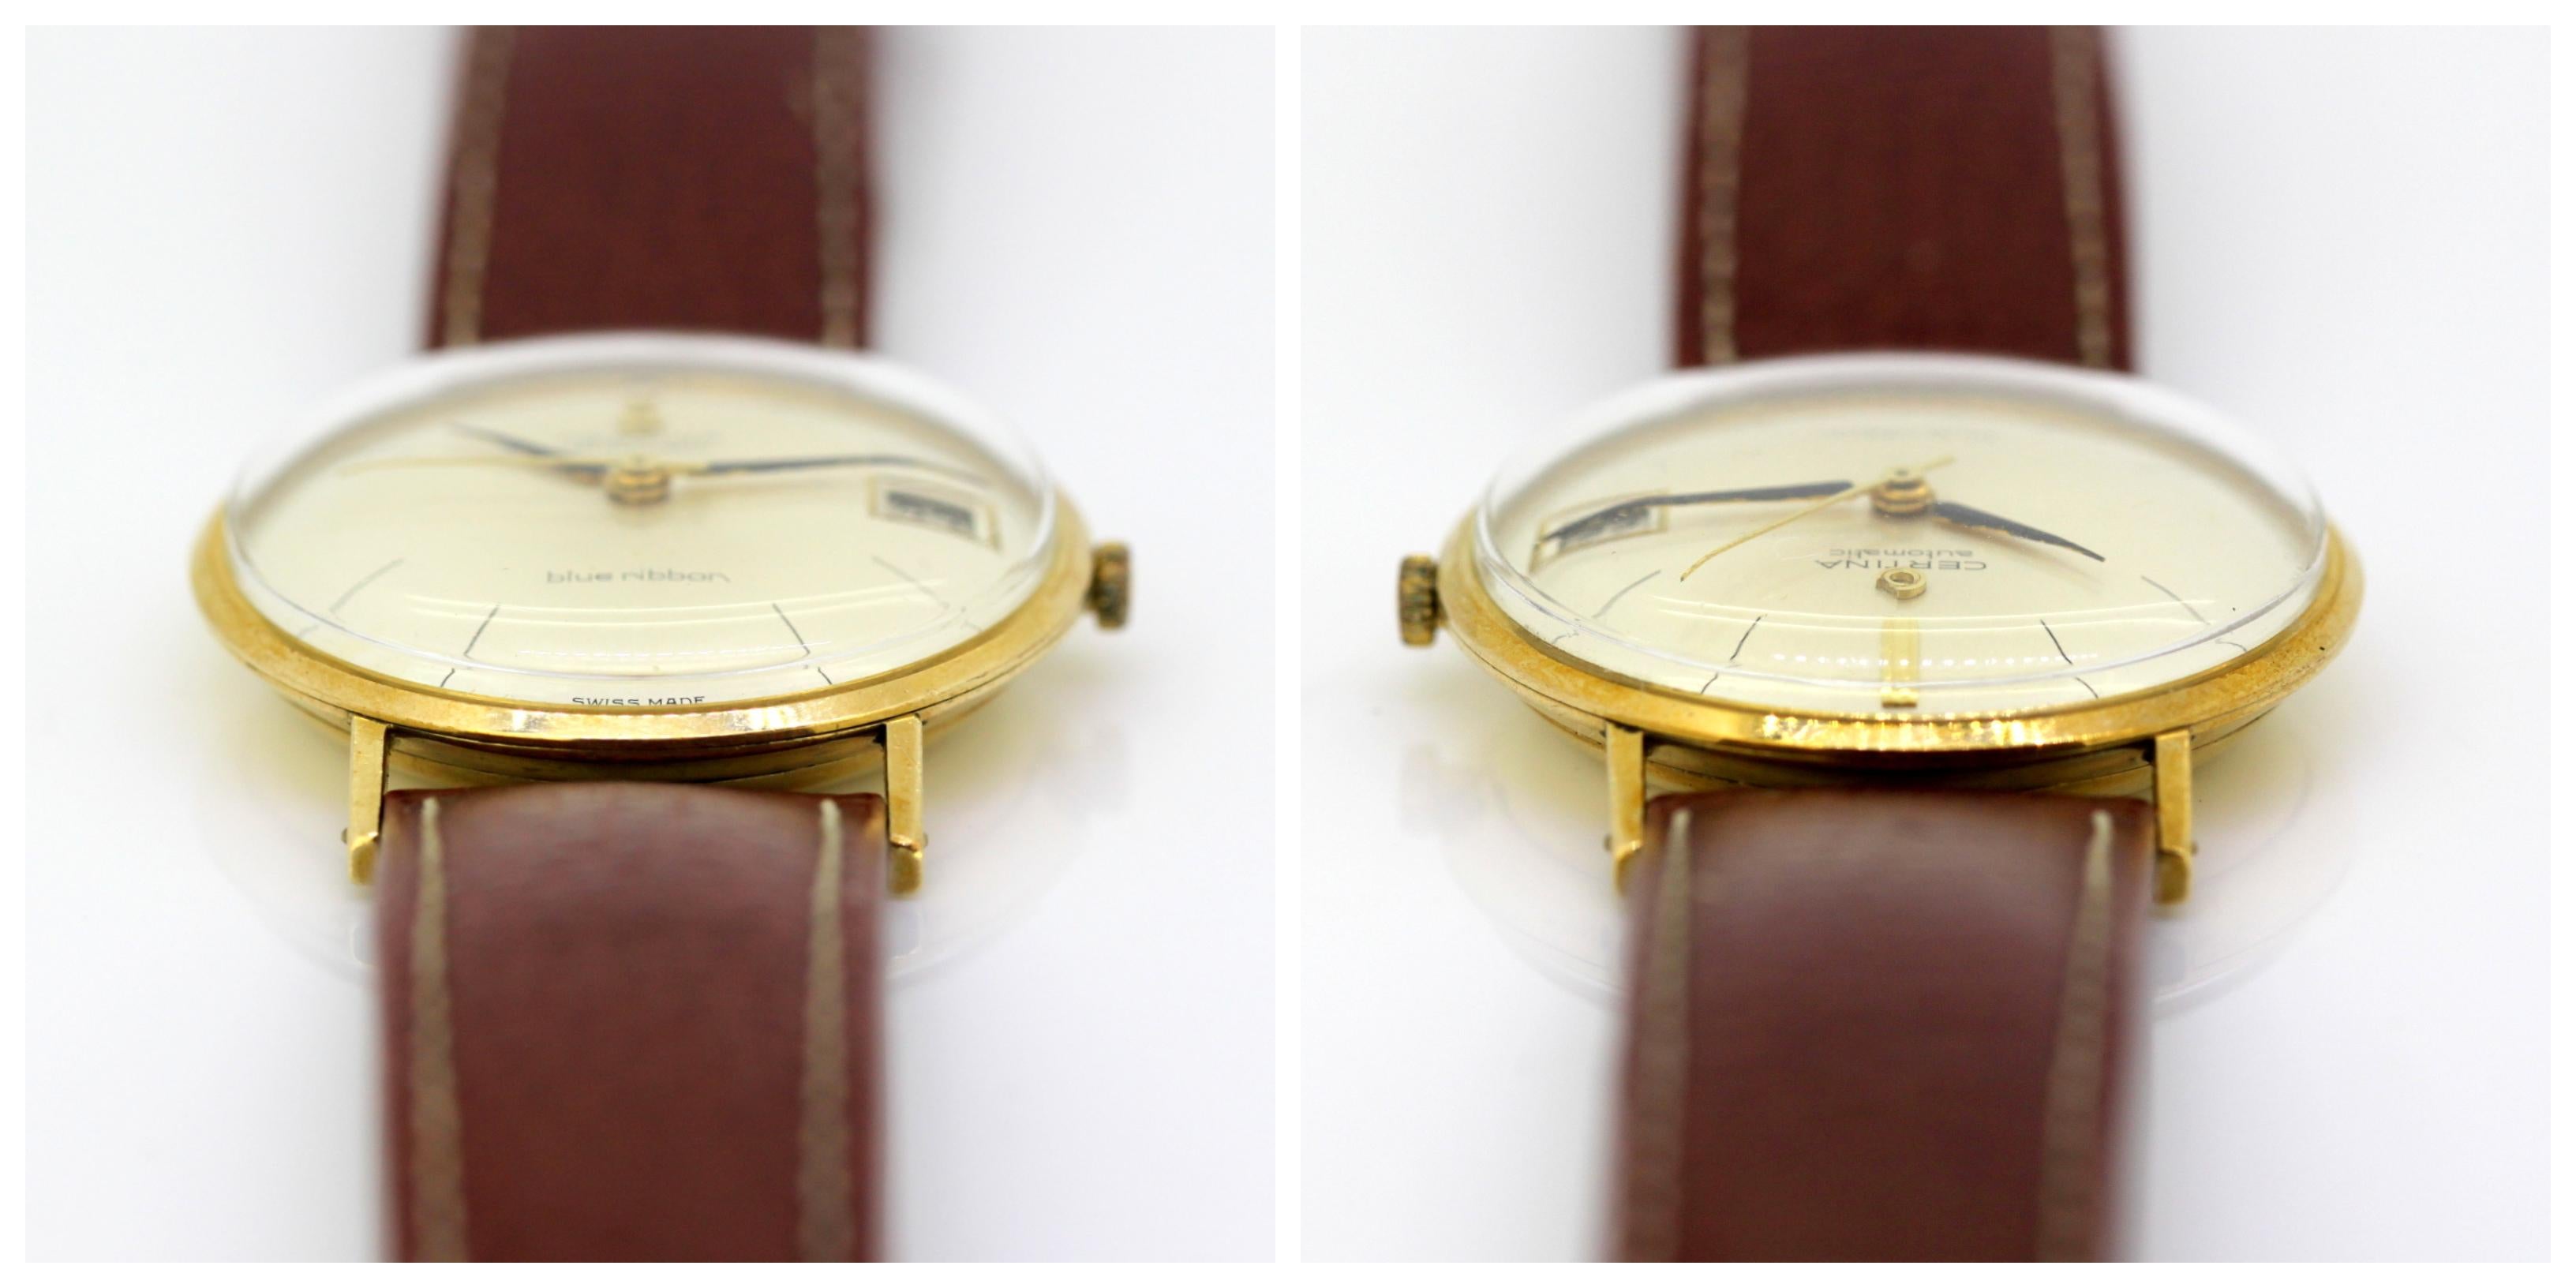 Vintage Certina Men's Automatic Wristwatch 